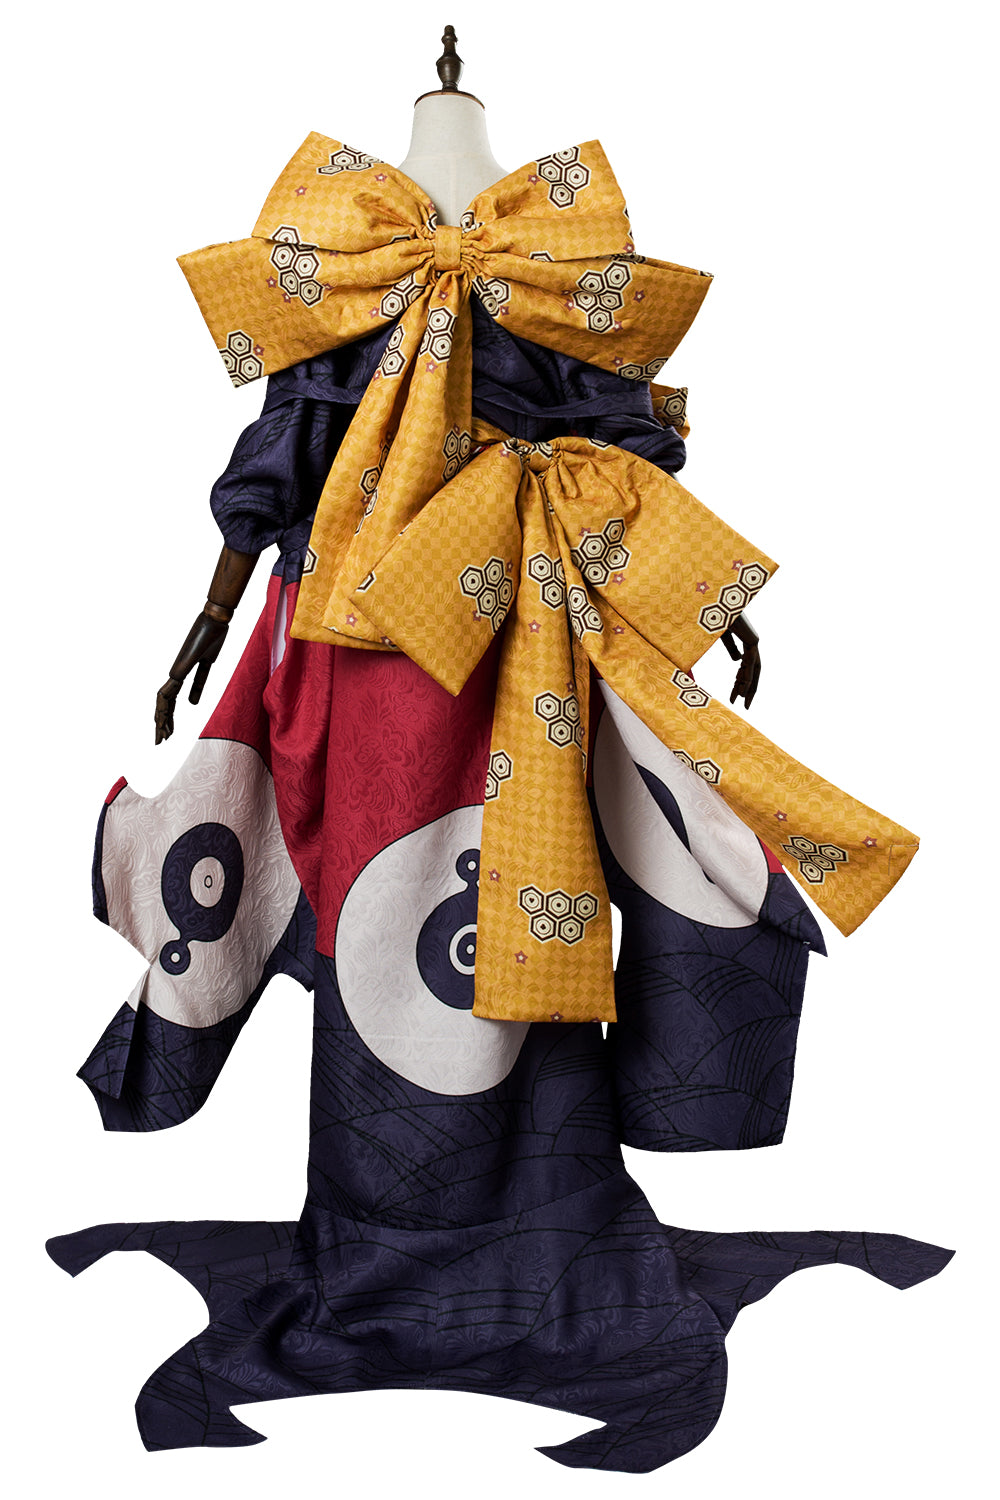 Fate Grand Order FGO Katsushika Hokusai Kimono Outfit Cosplay Costume